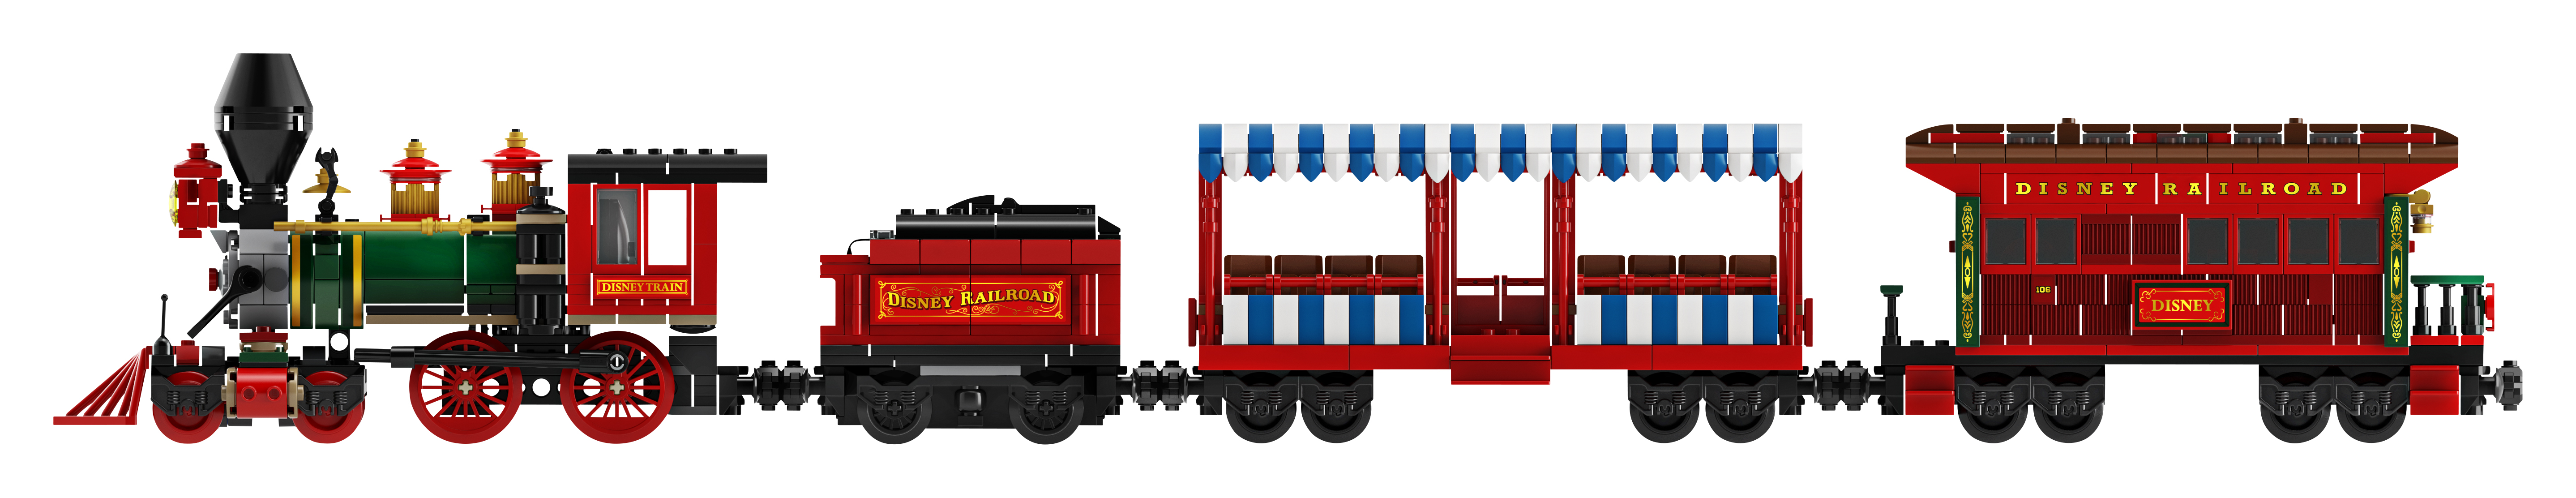 lego disney train and station set